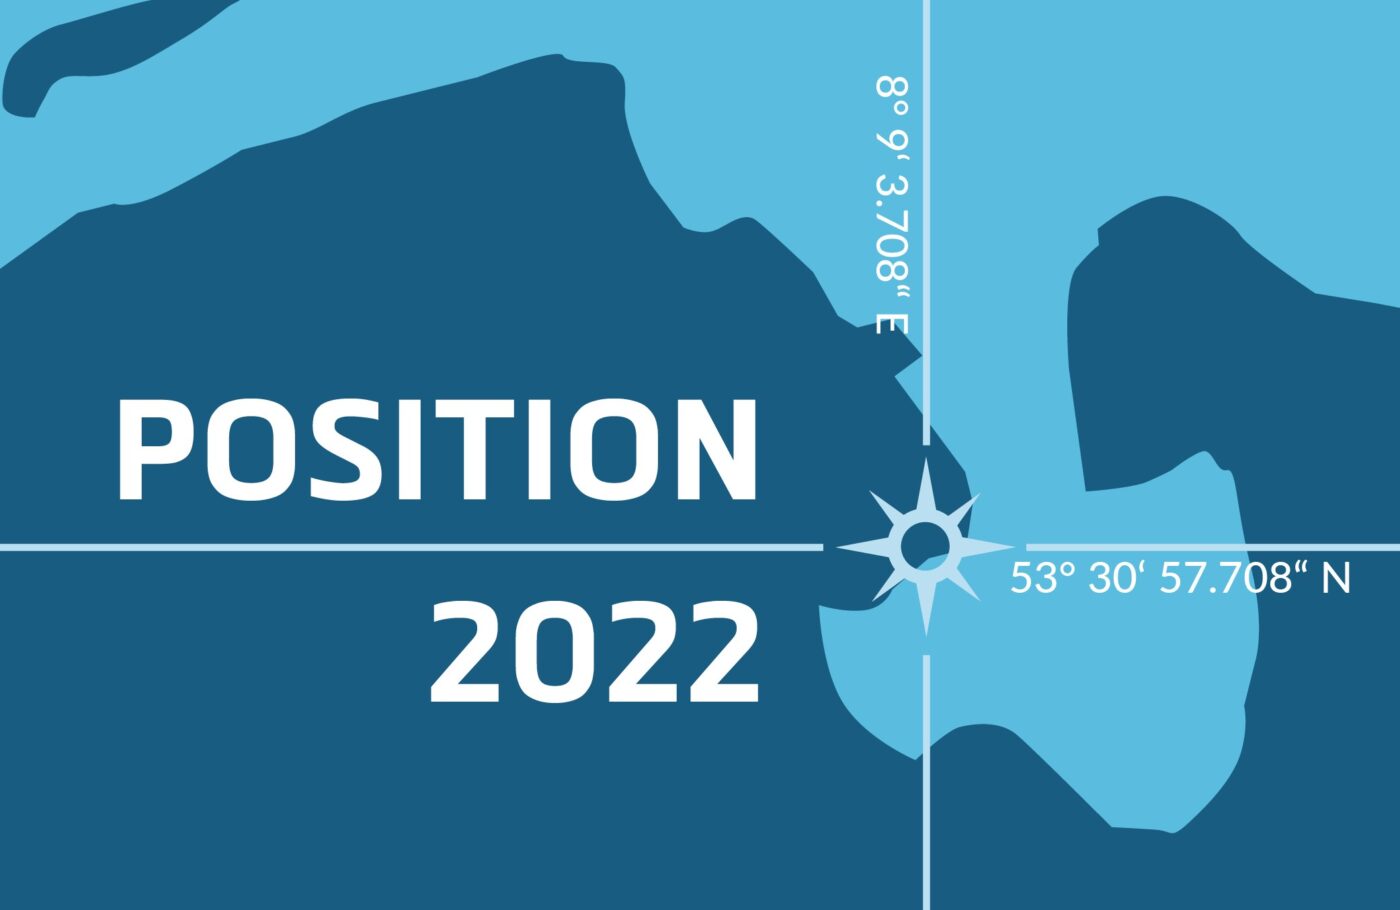 Position 2022